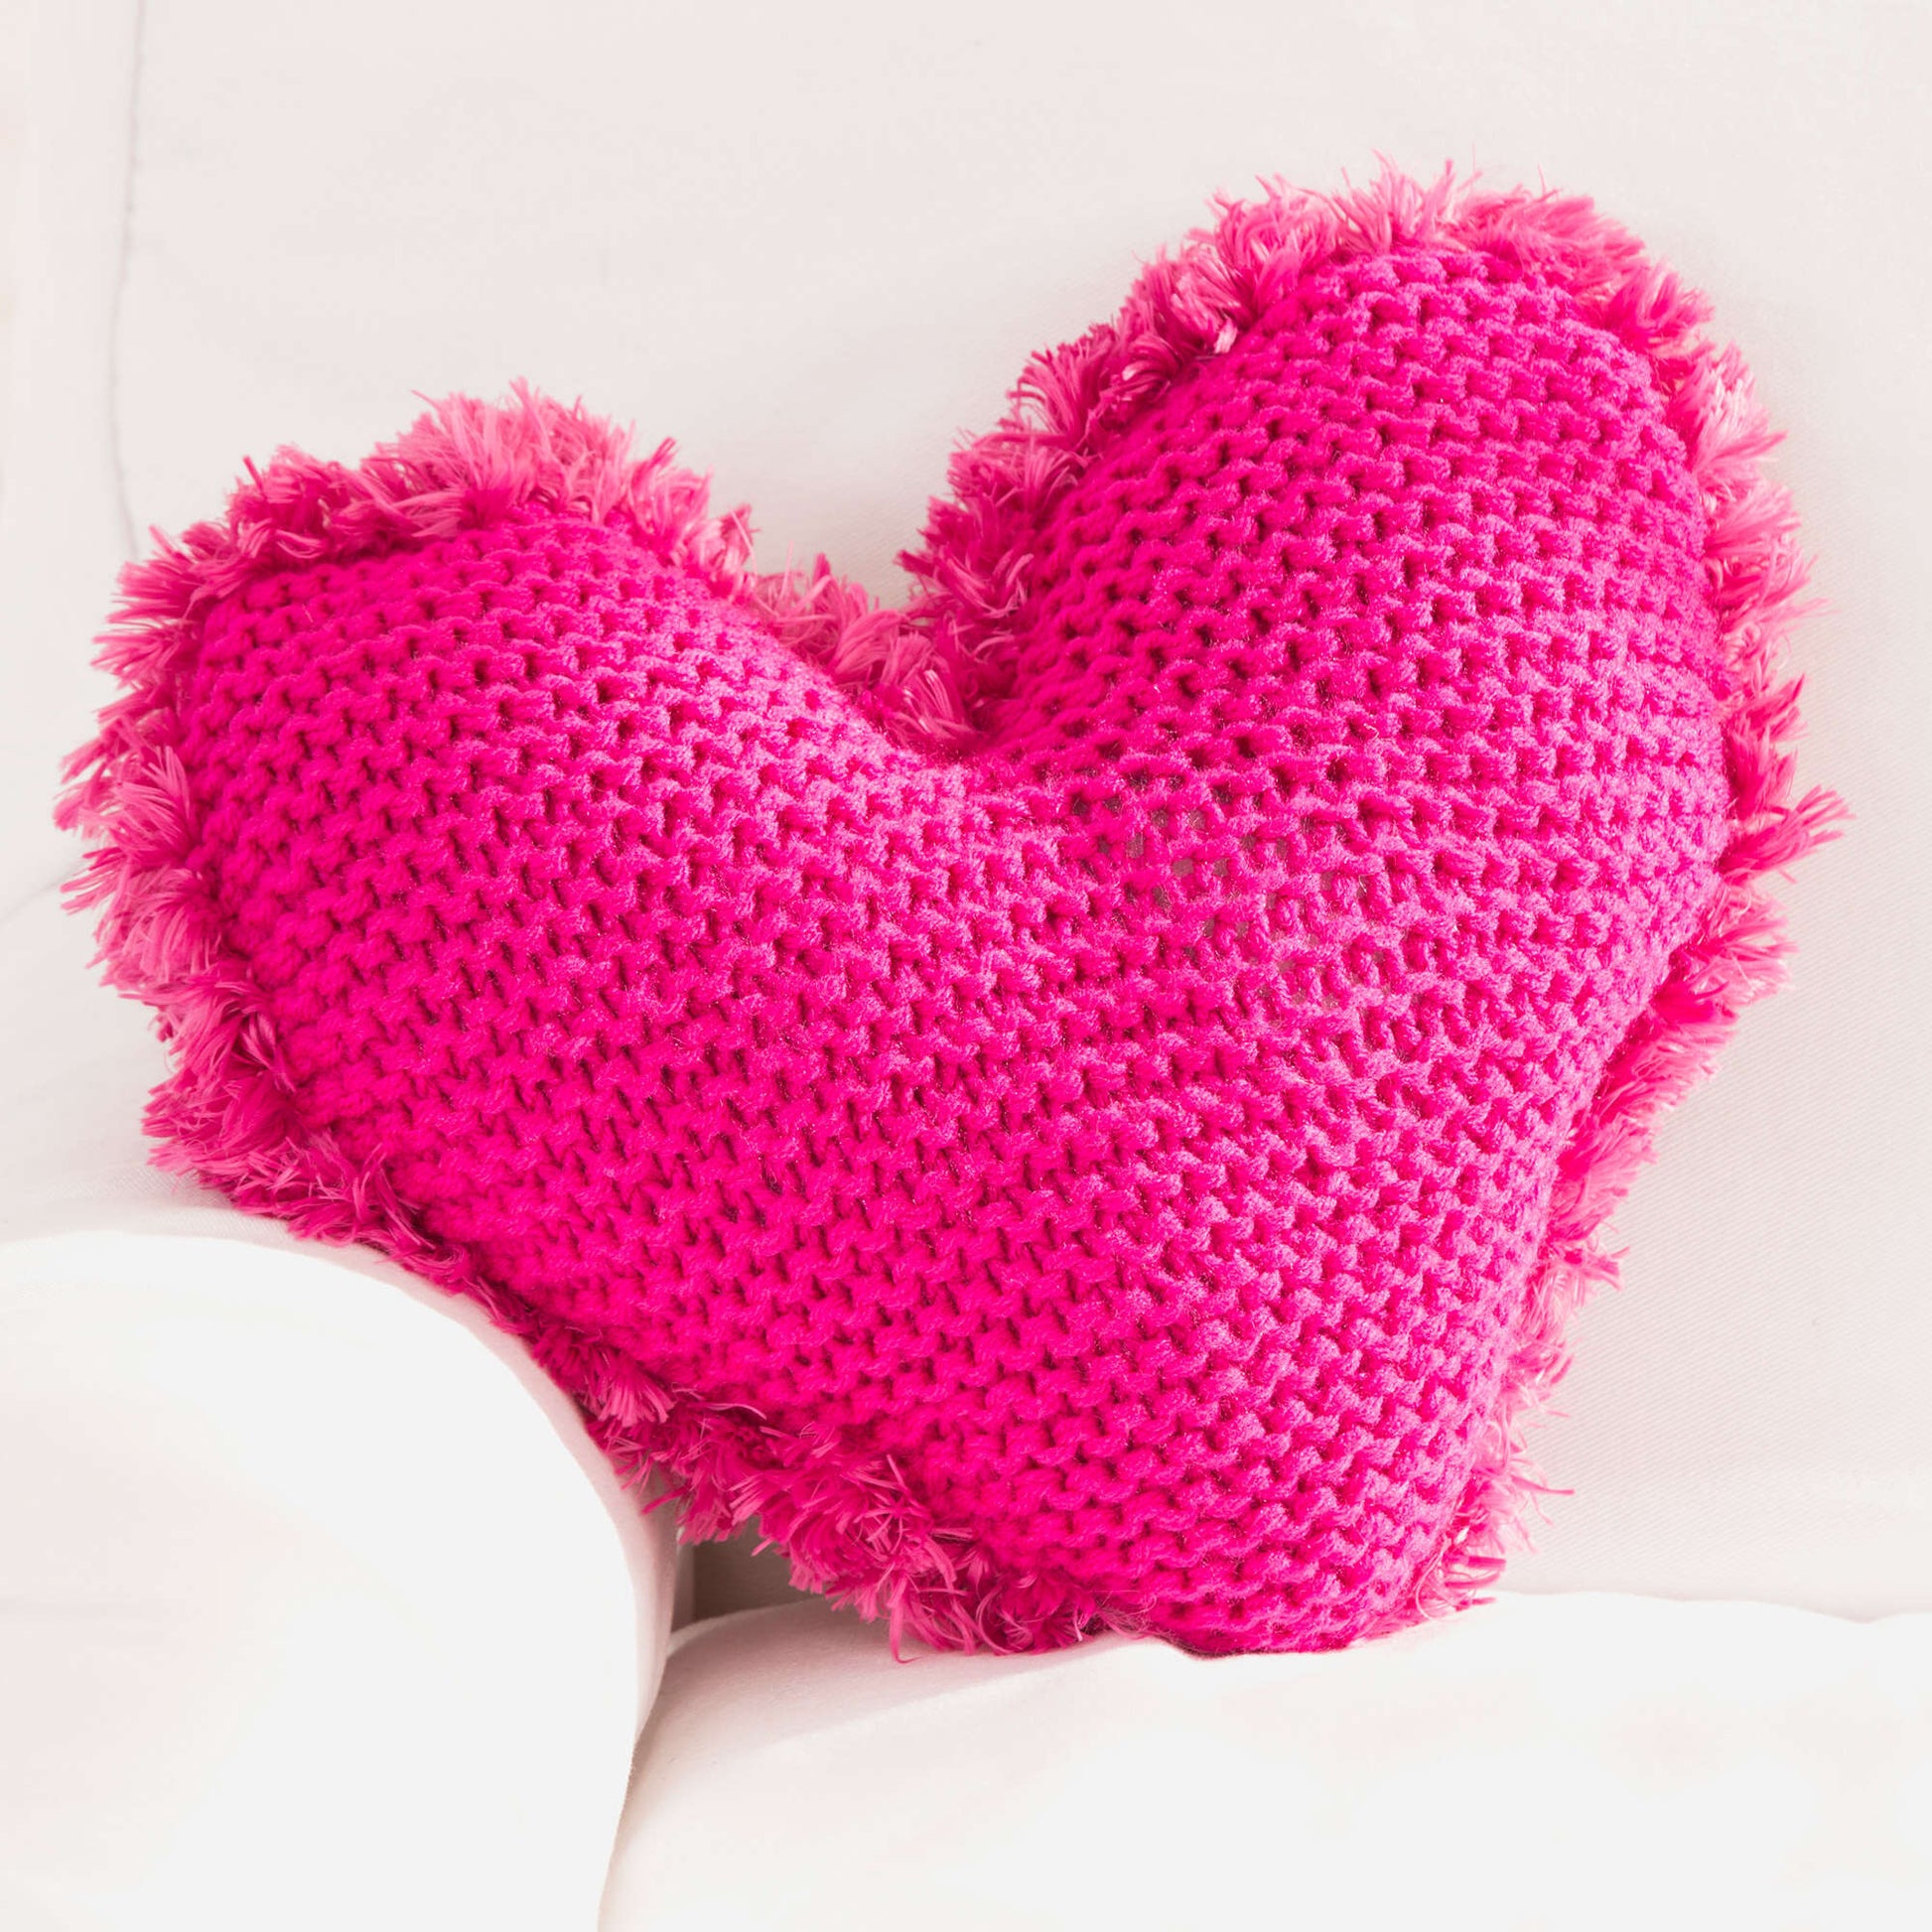 Free Red Heart Knit Be Still My Heart Pillow Pattern